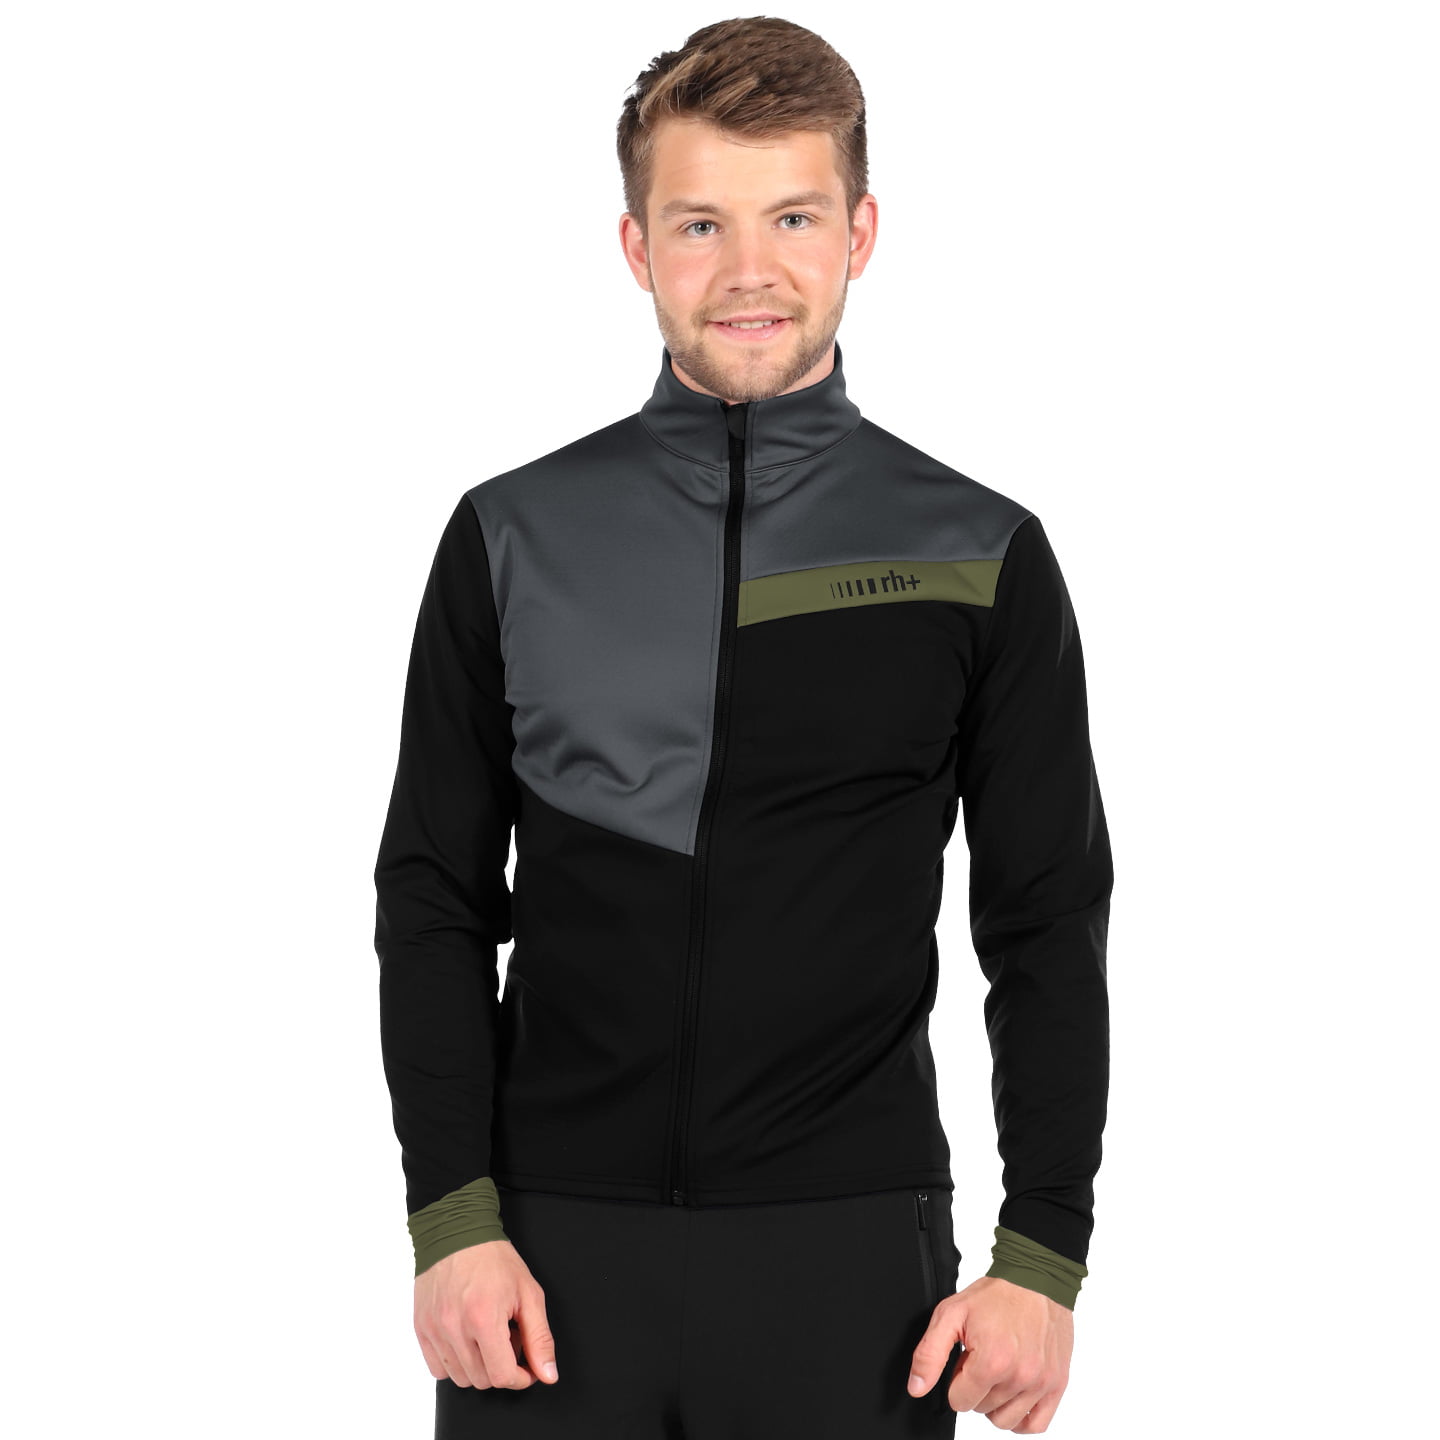 RH+ Klyma Winter Jacket, for men, size XL, Cycle jacket, Cycle gear